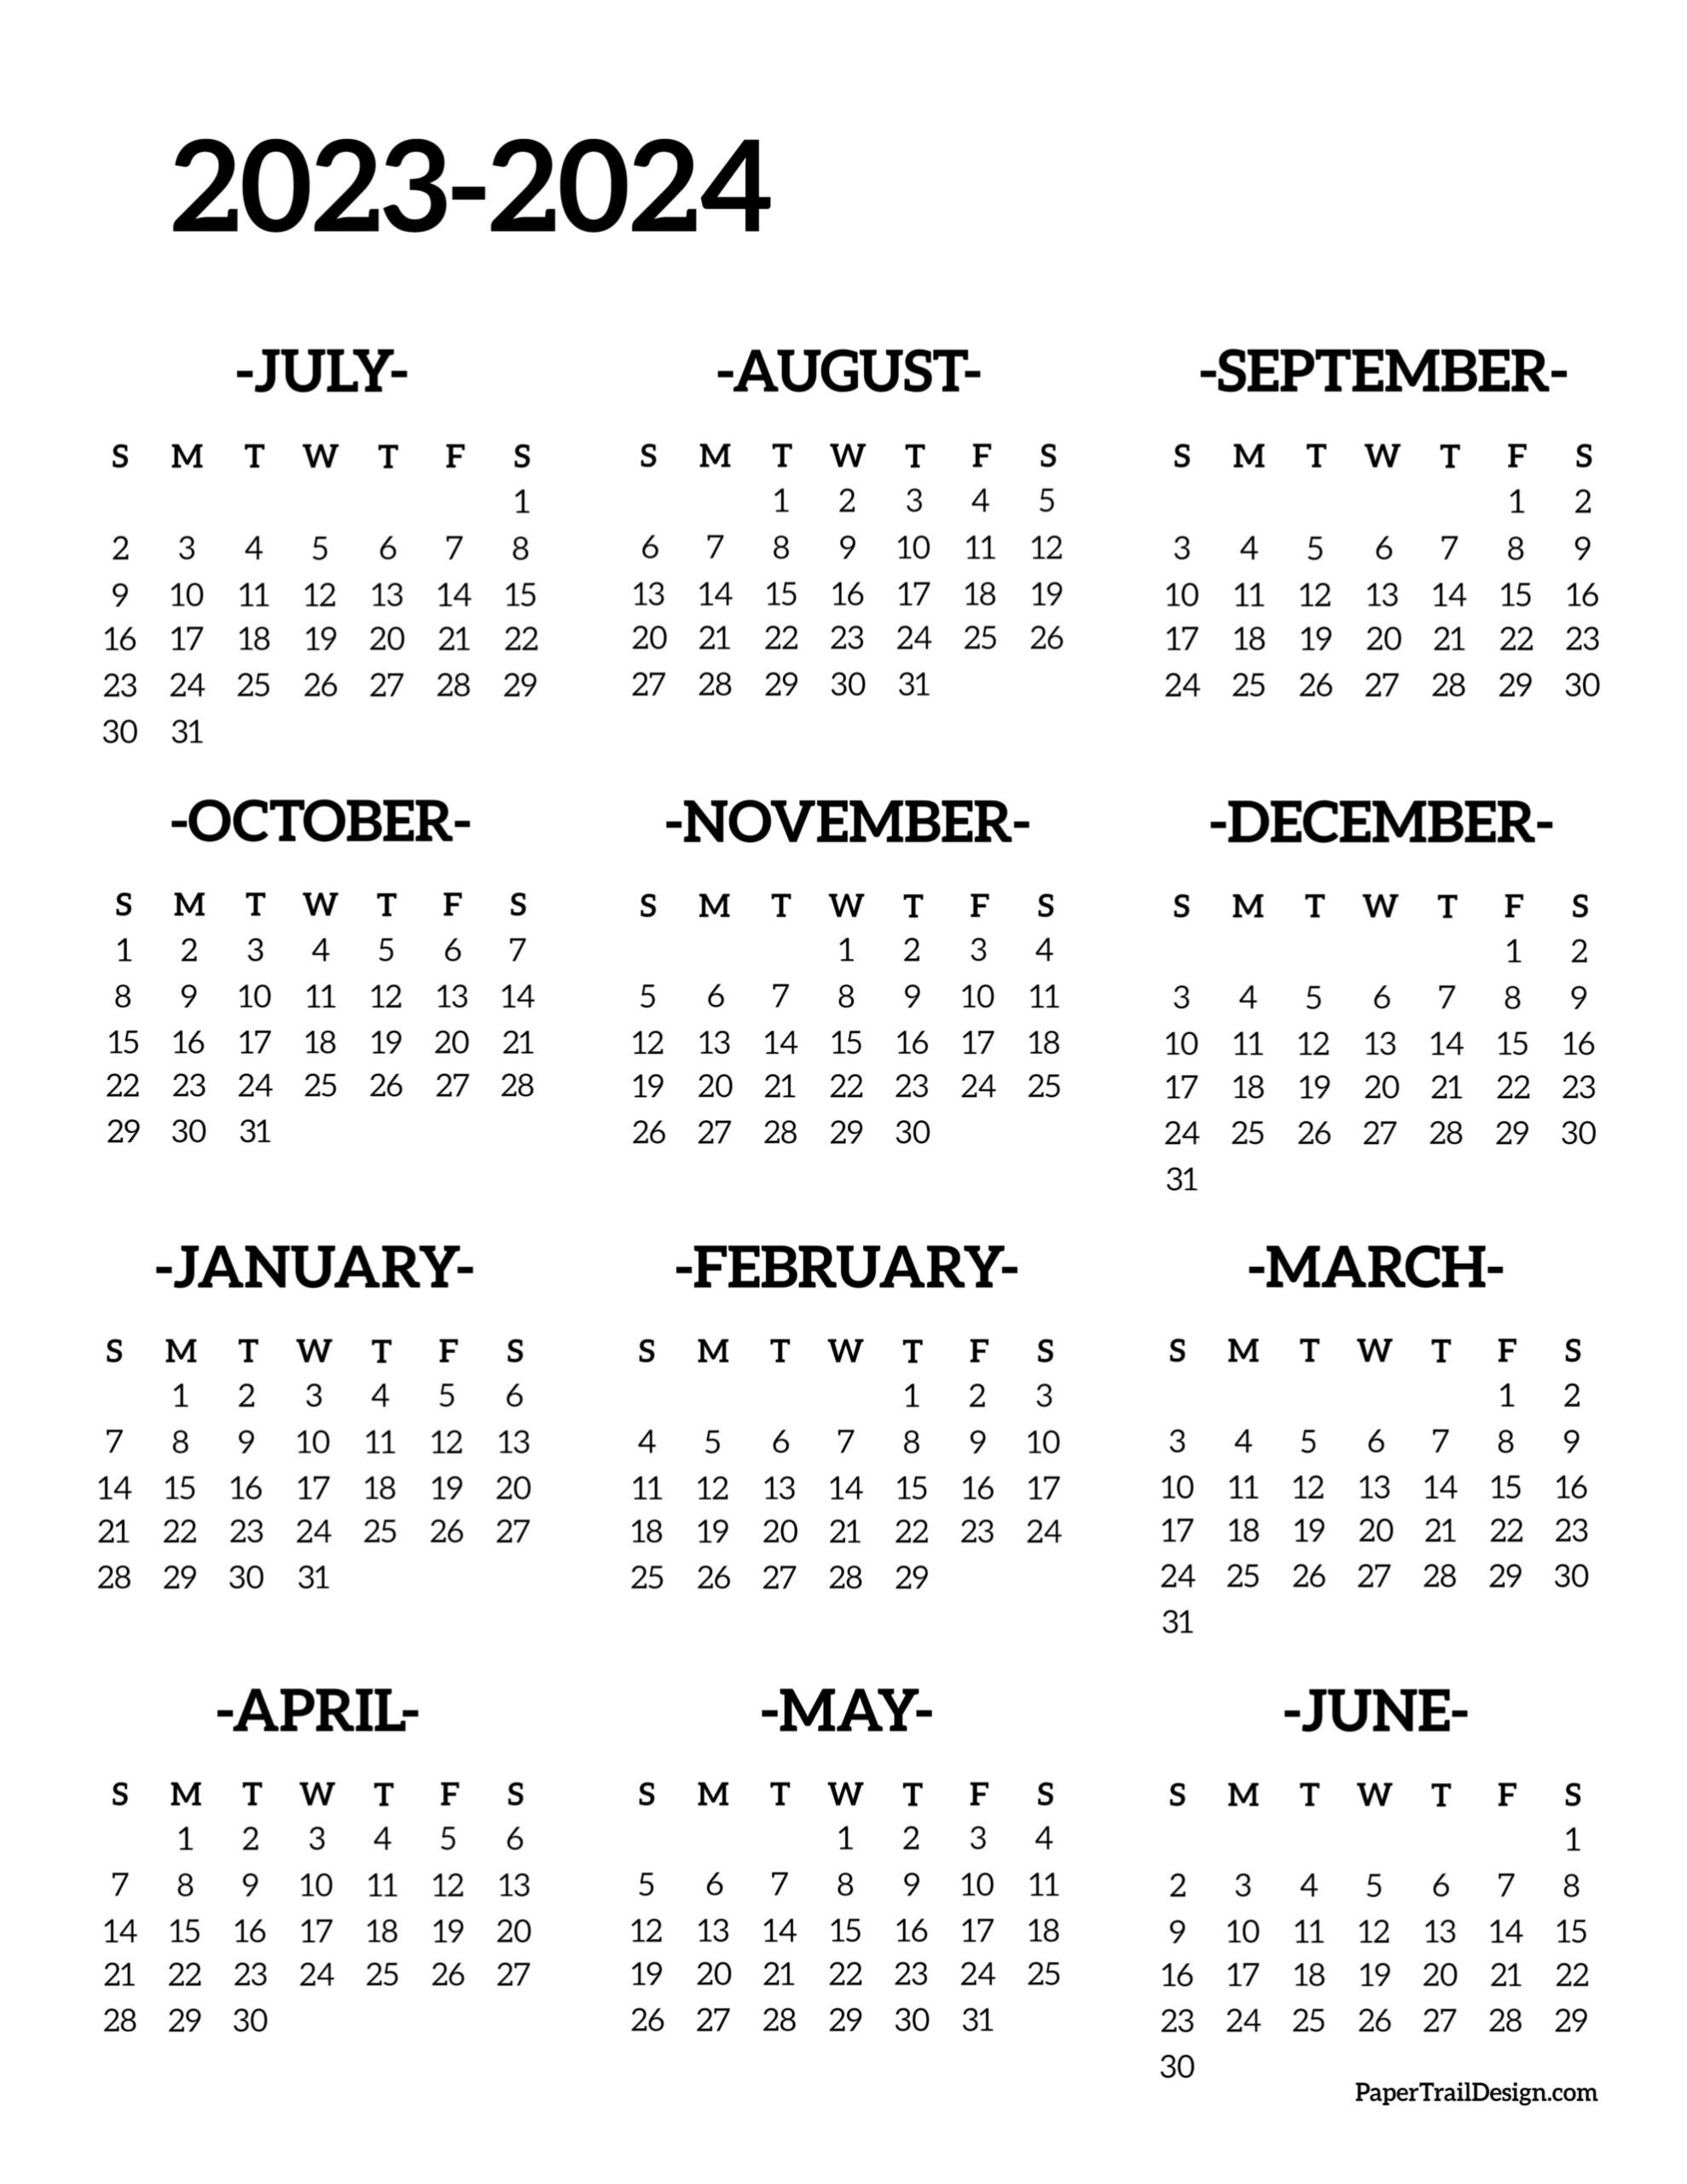 2023-2024 School Year Calendar Free Printable - Paper Trail Design for Printable 2023-2024 Calendar